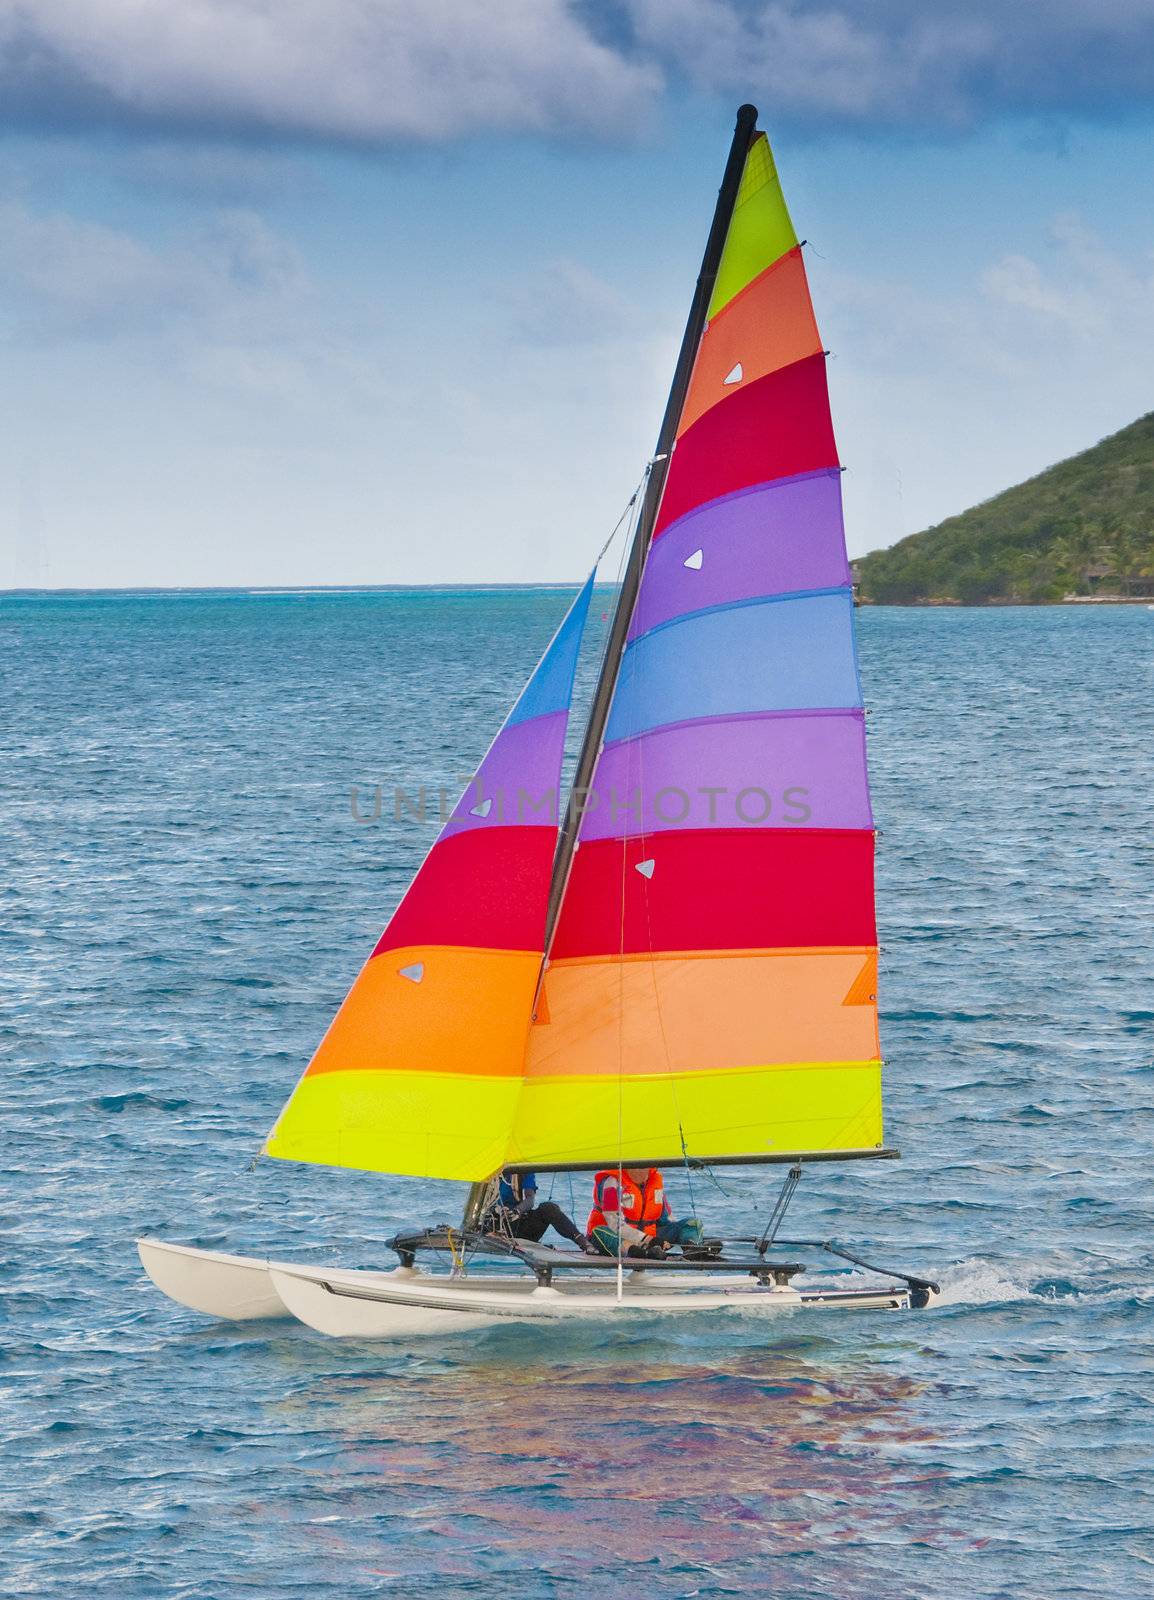 Sailing boat - a catamaran off a caribbean coast